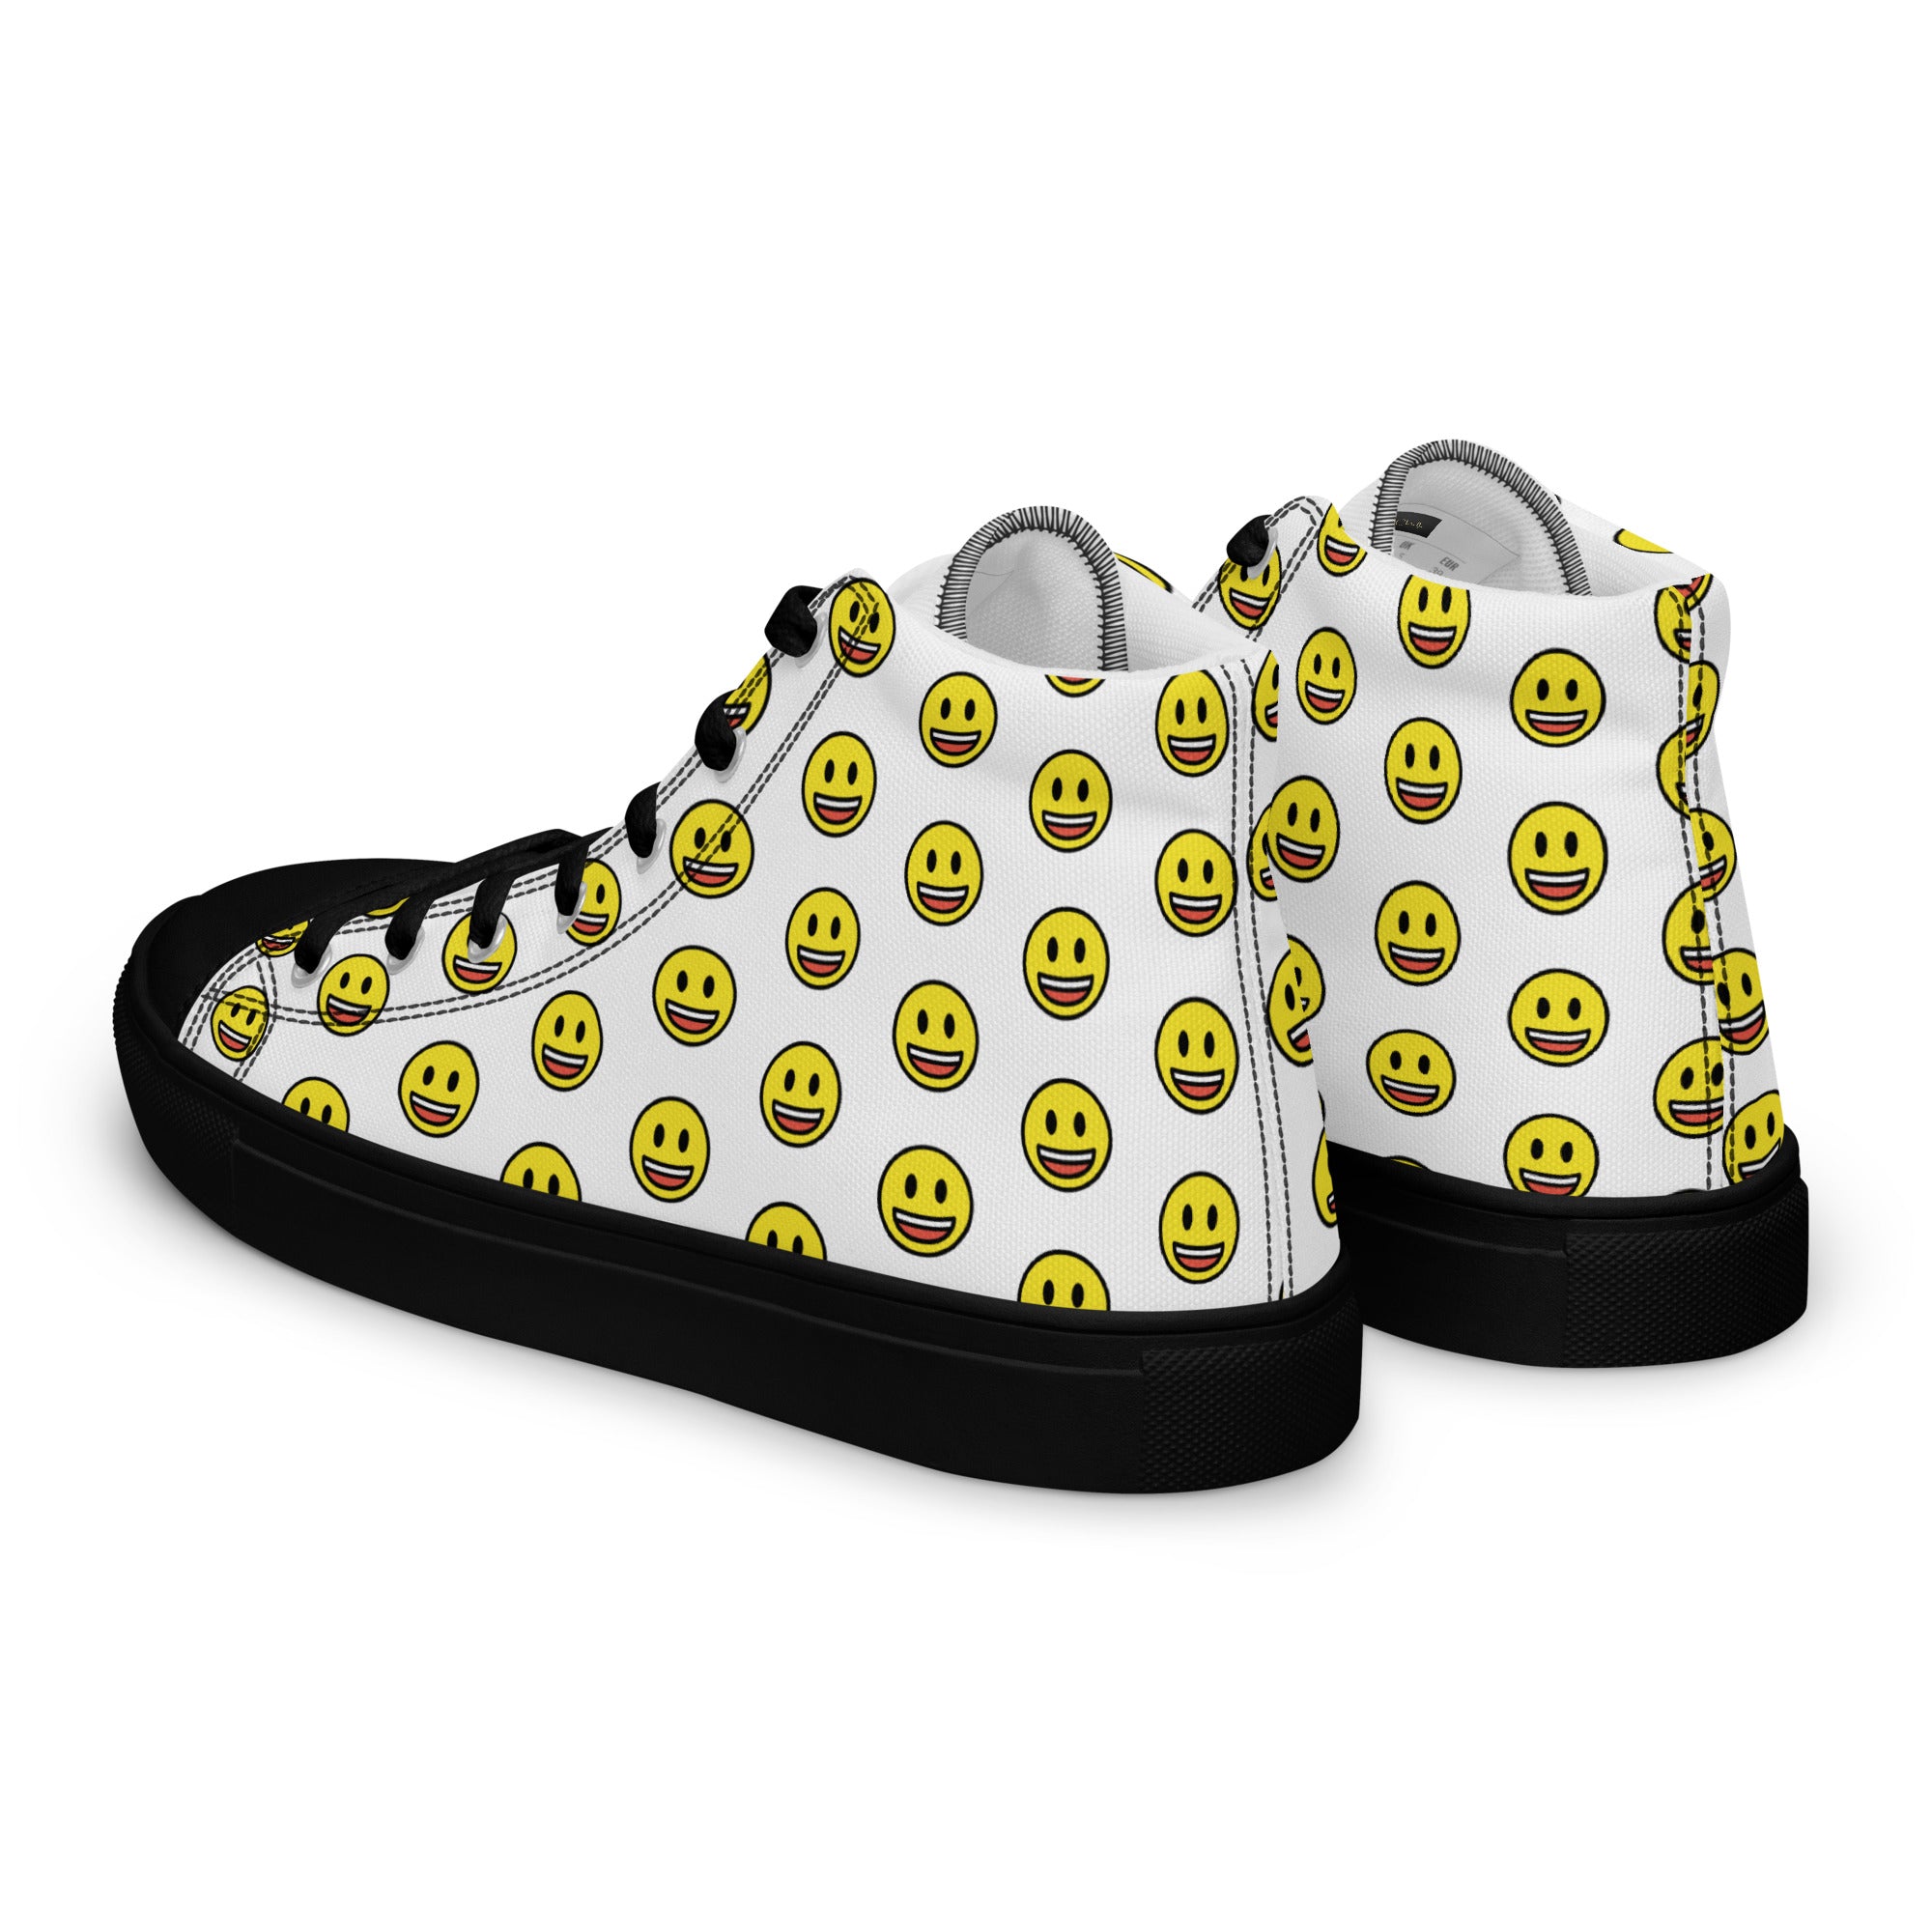 Chitelli's Happy Face Emoji Men's High Top Shoes